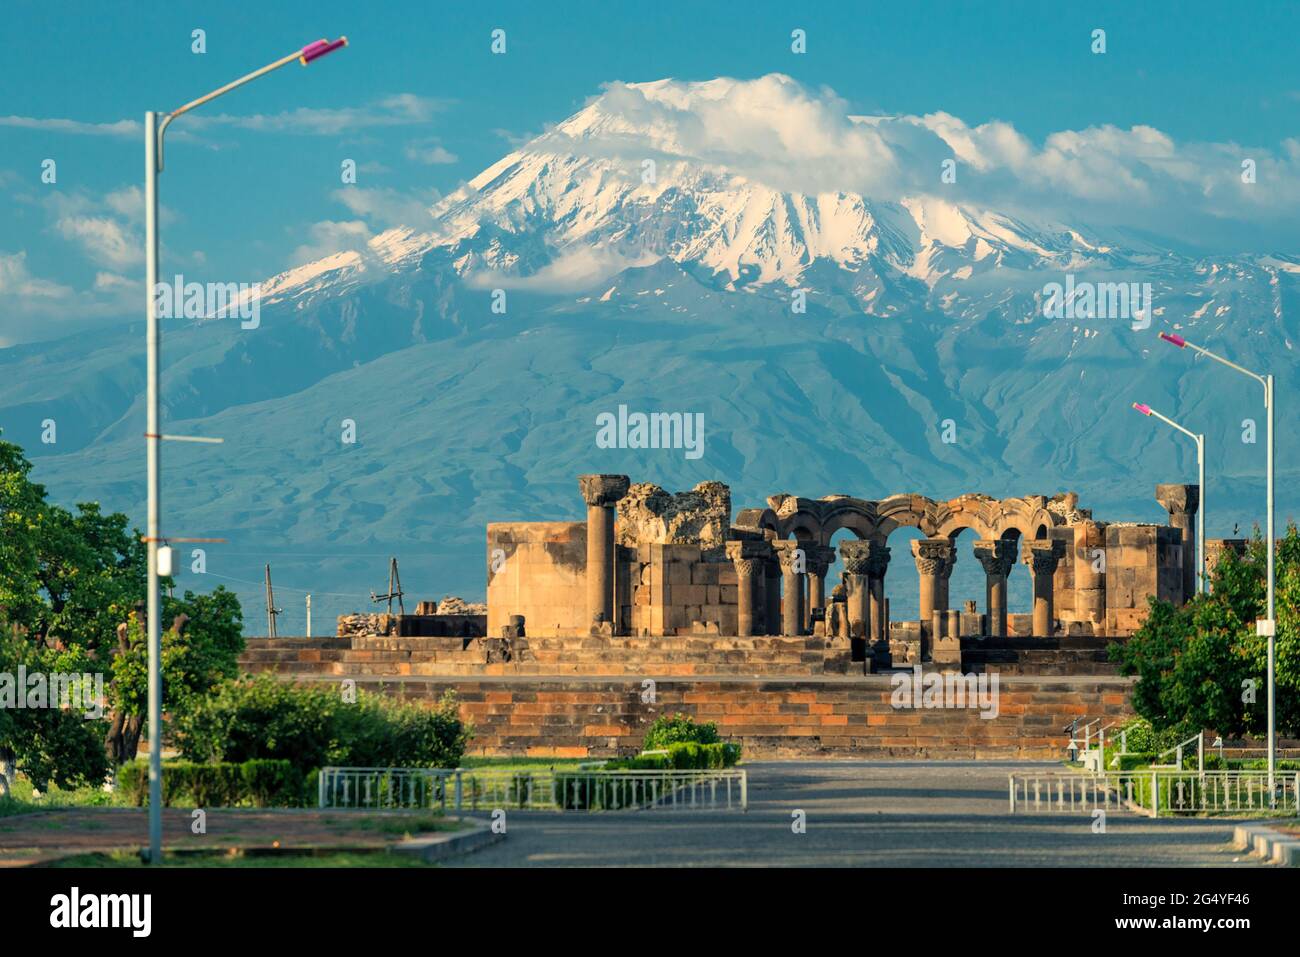 ancient ruins of Zvartnots temple, Armenia, view of Mount Ararat Stock Photo